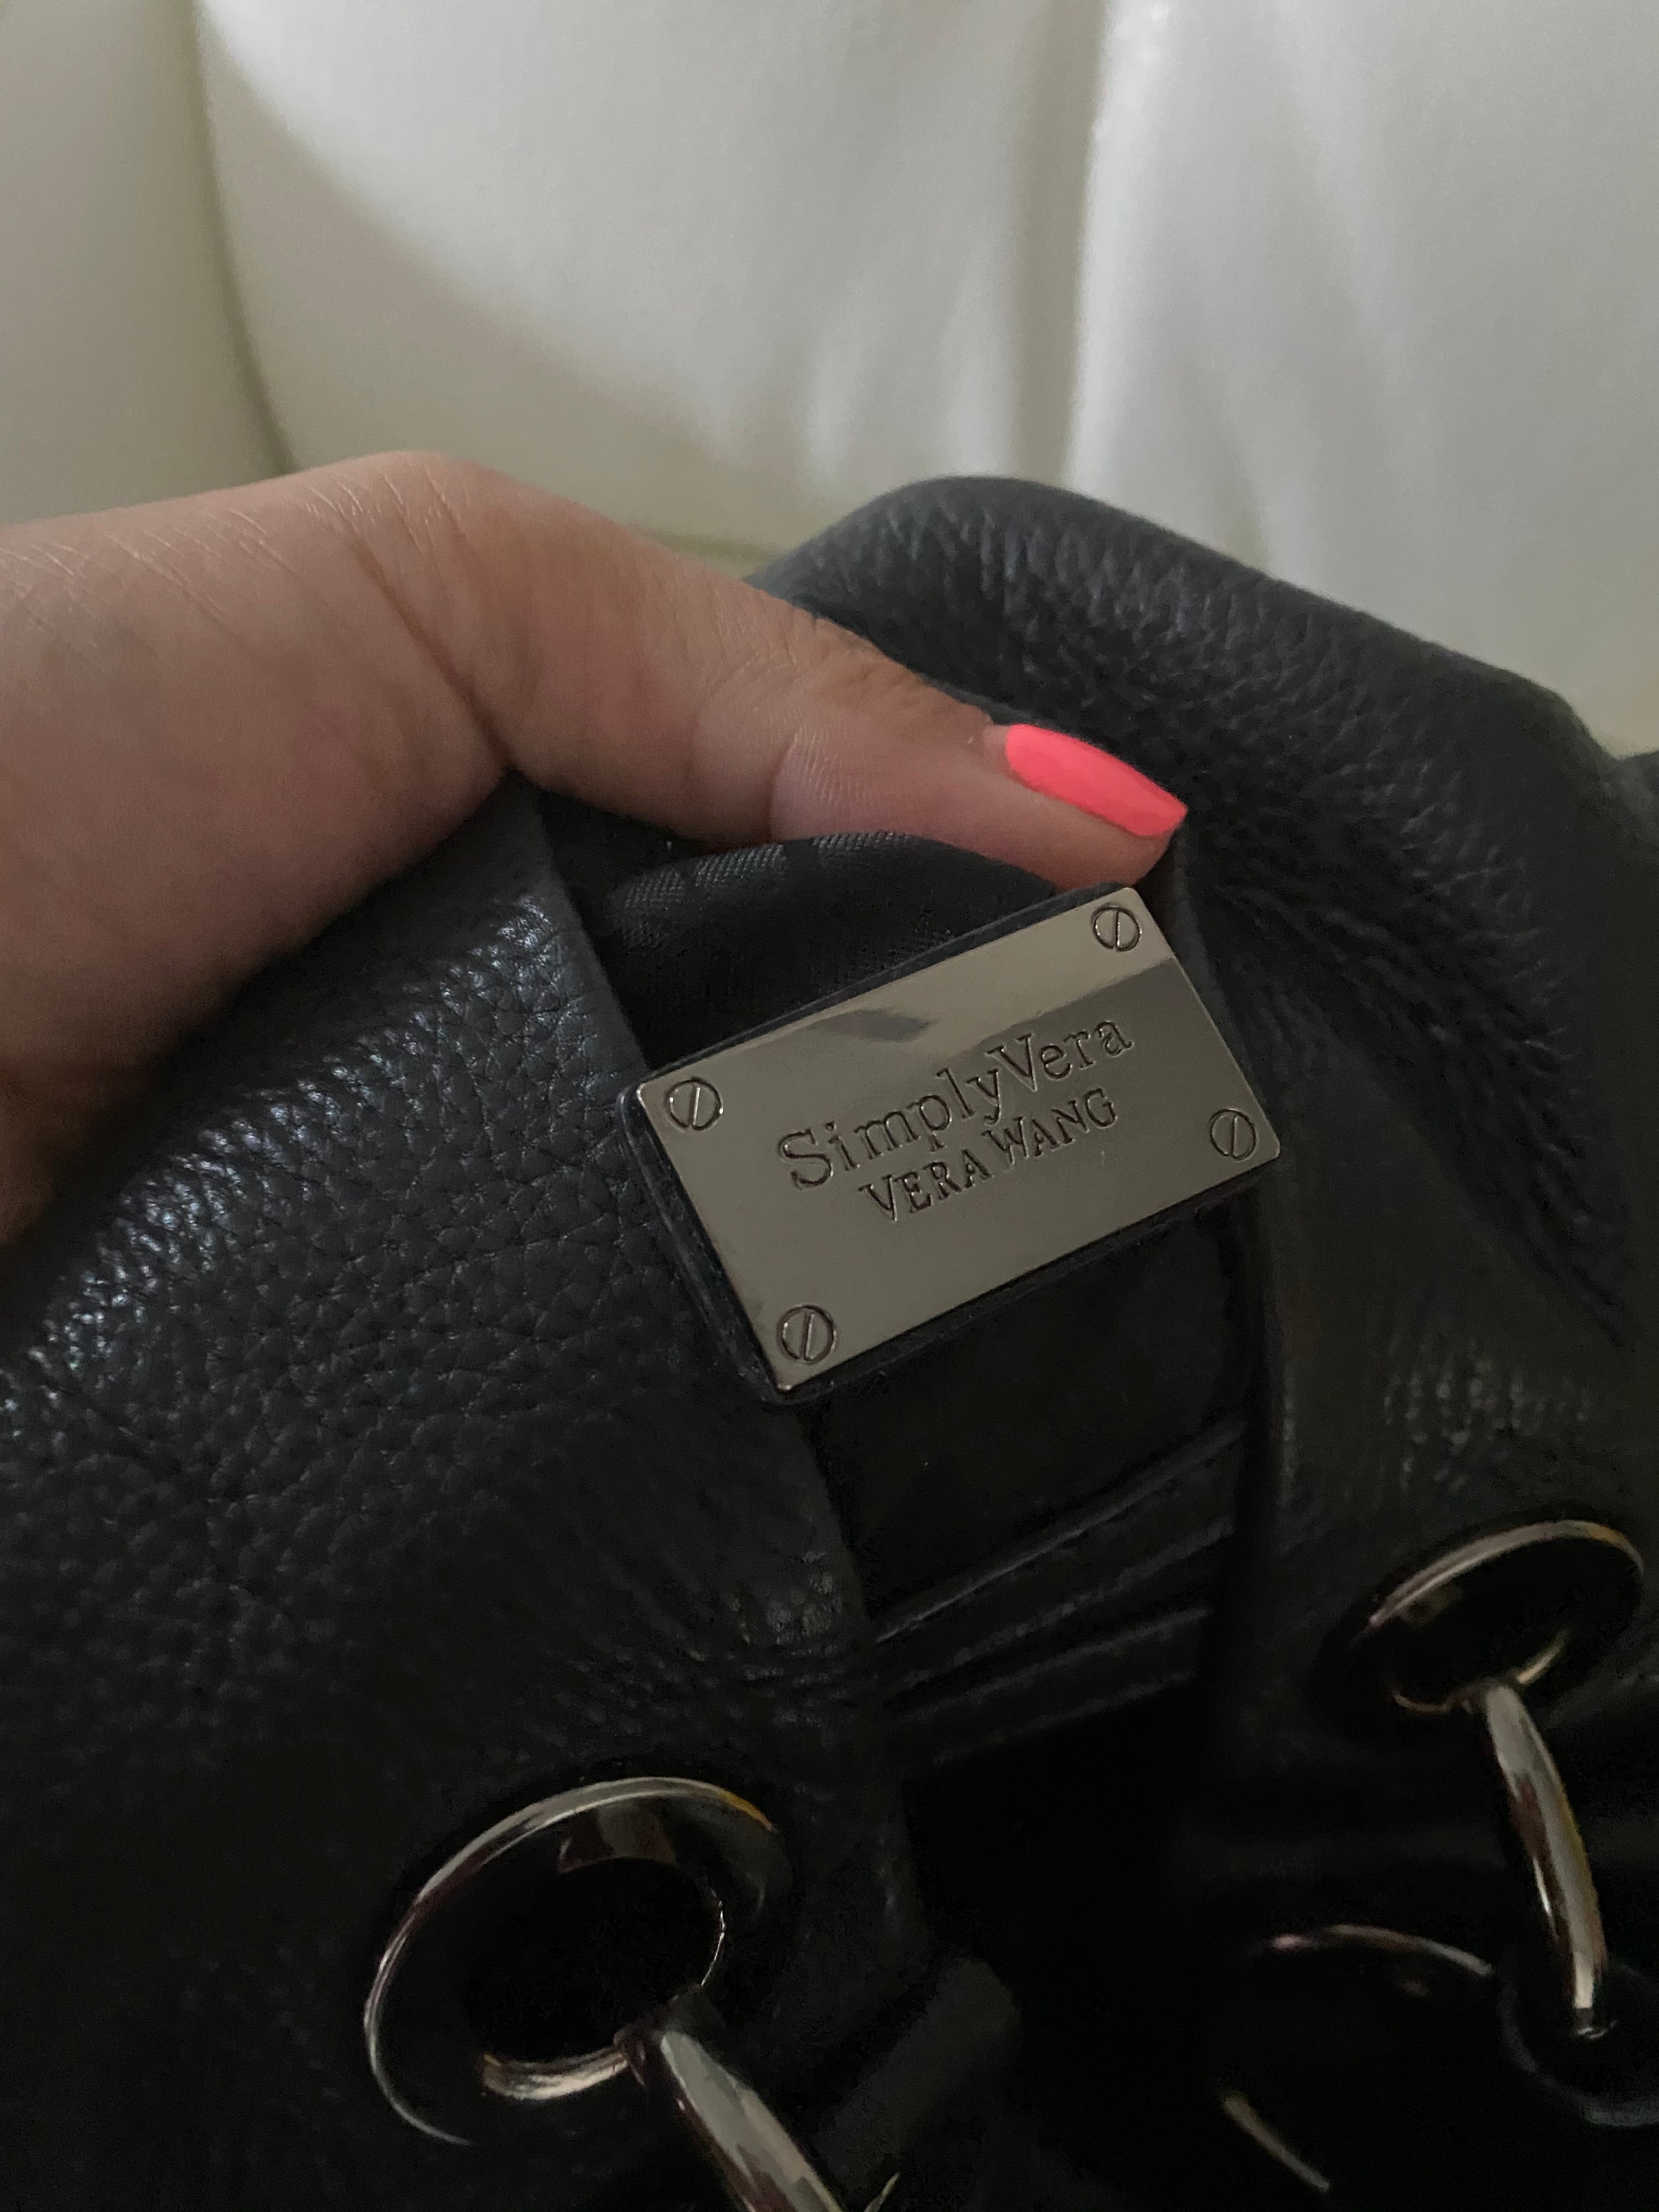 Simply Vera Vera Wang Handbag Leather Black 3 Zipper Compartments Chain On  Strap